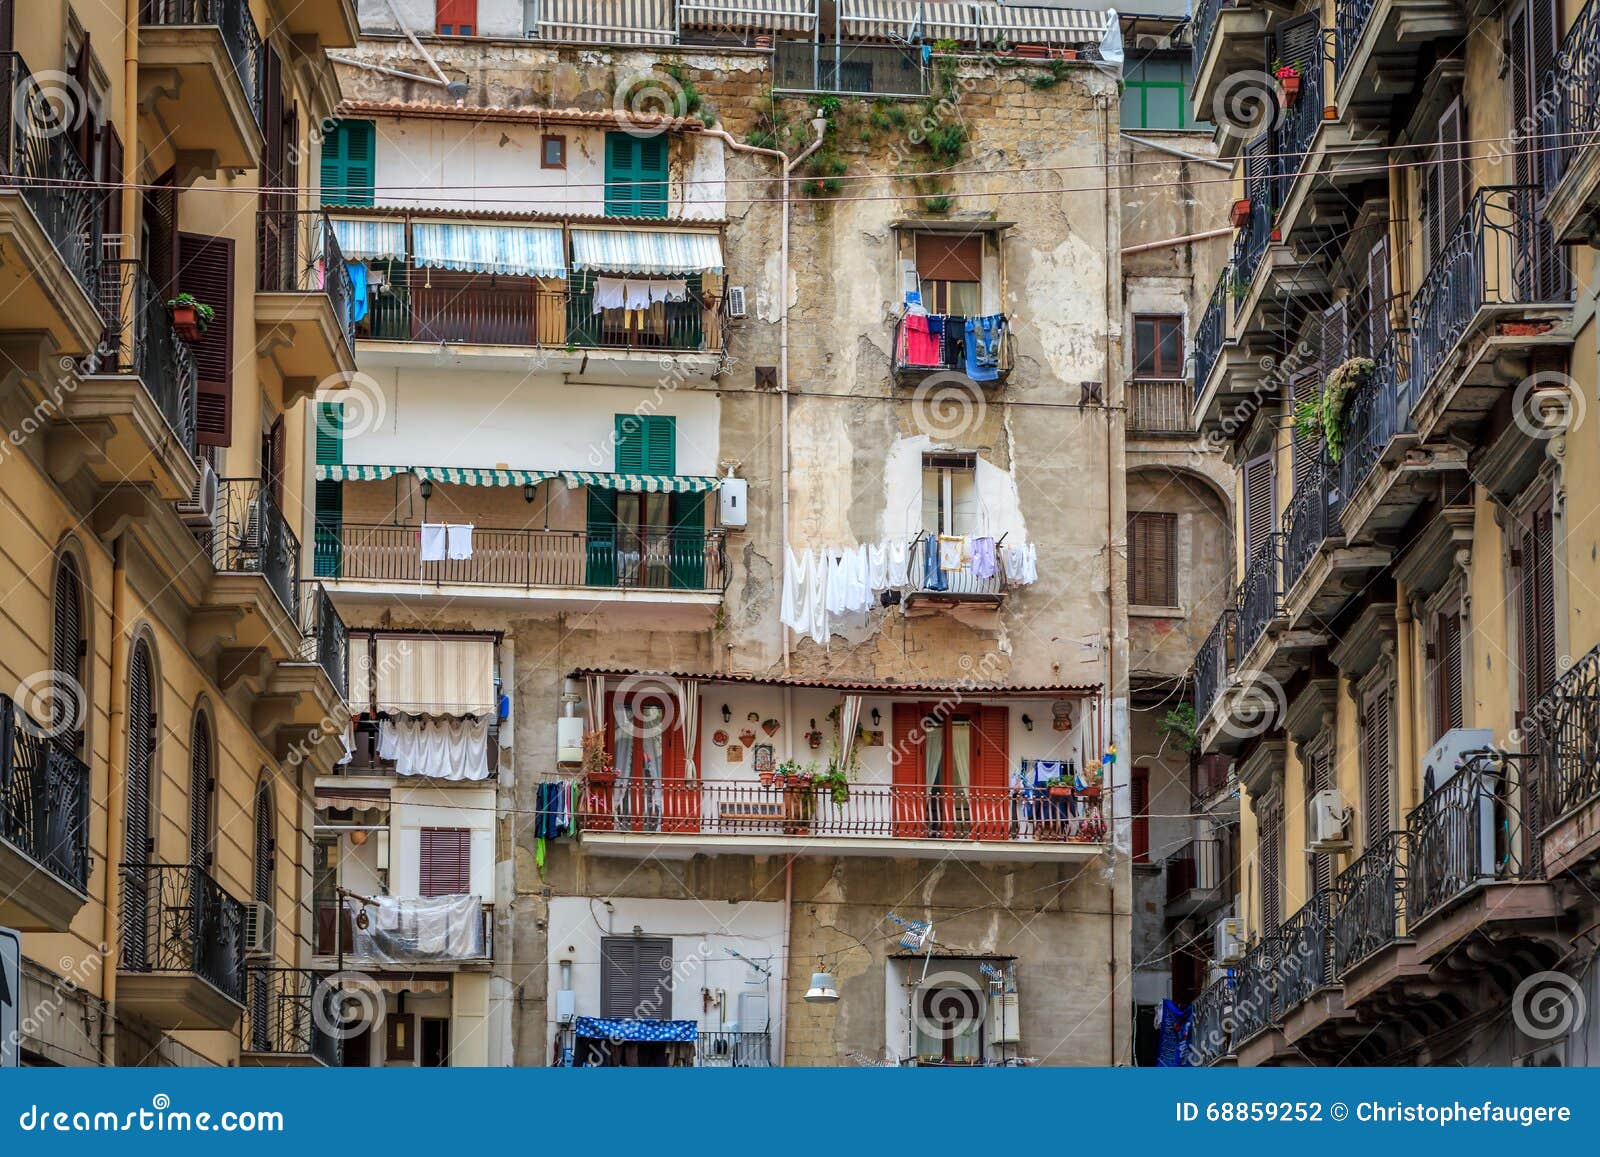 Naples spanish quarters stock photo. Image of christophe - 68859252